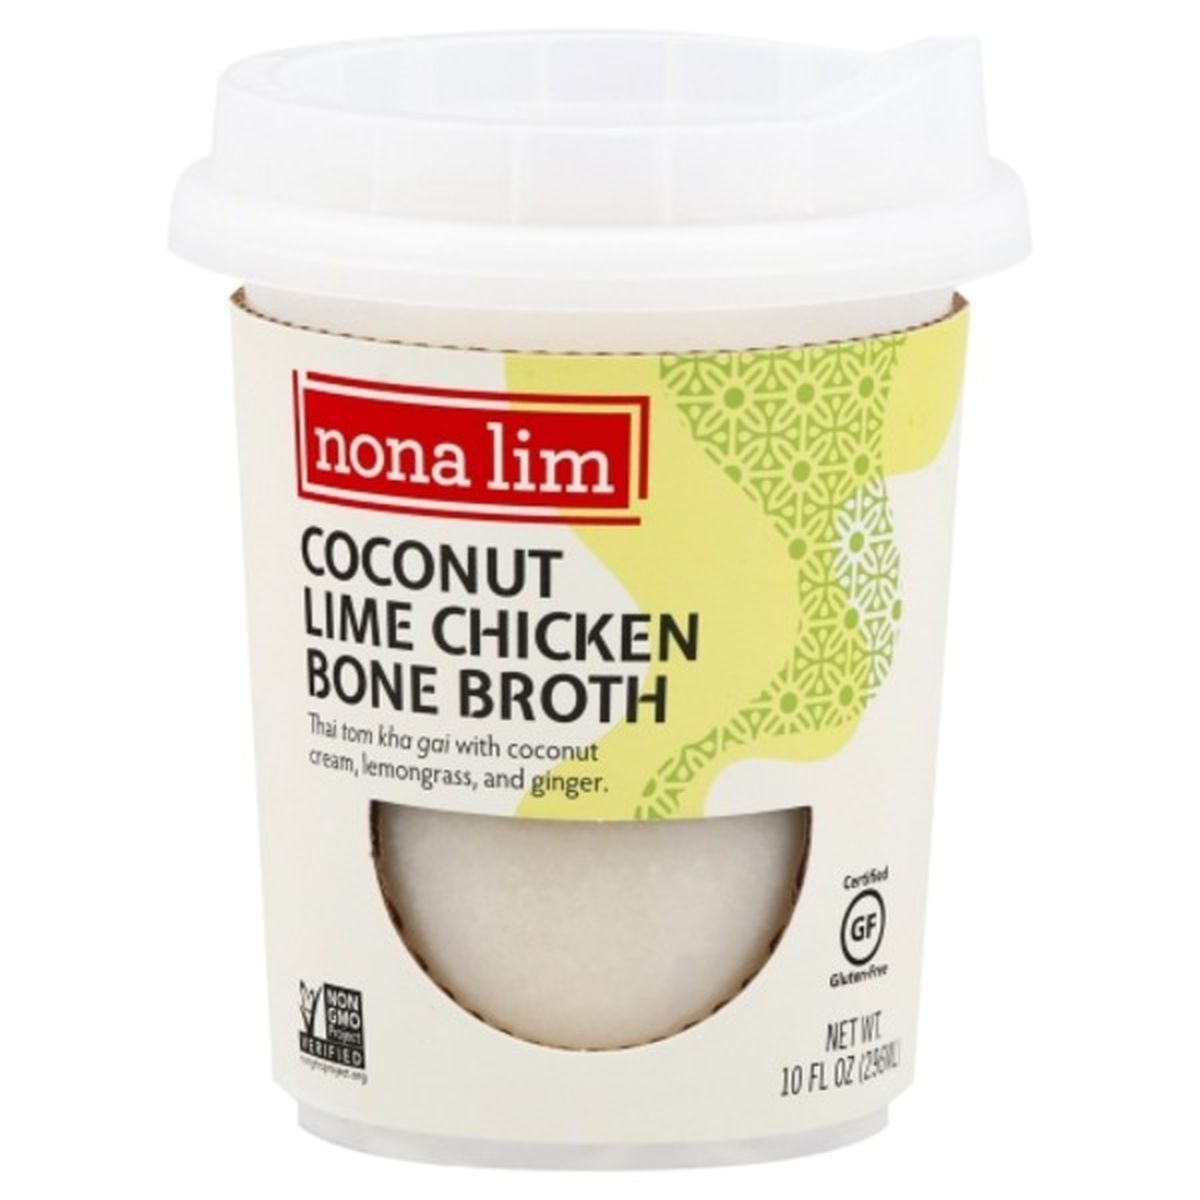 Calories in Nona Lim Bone Broth, Coconut Lime Chicken